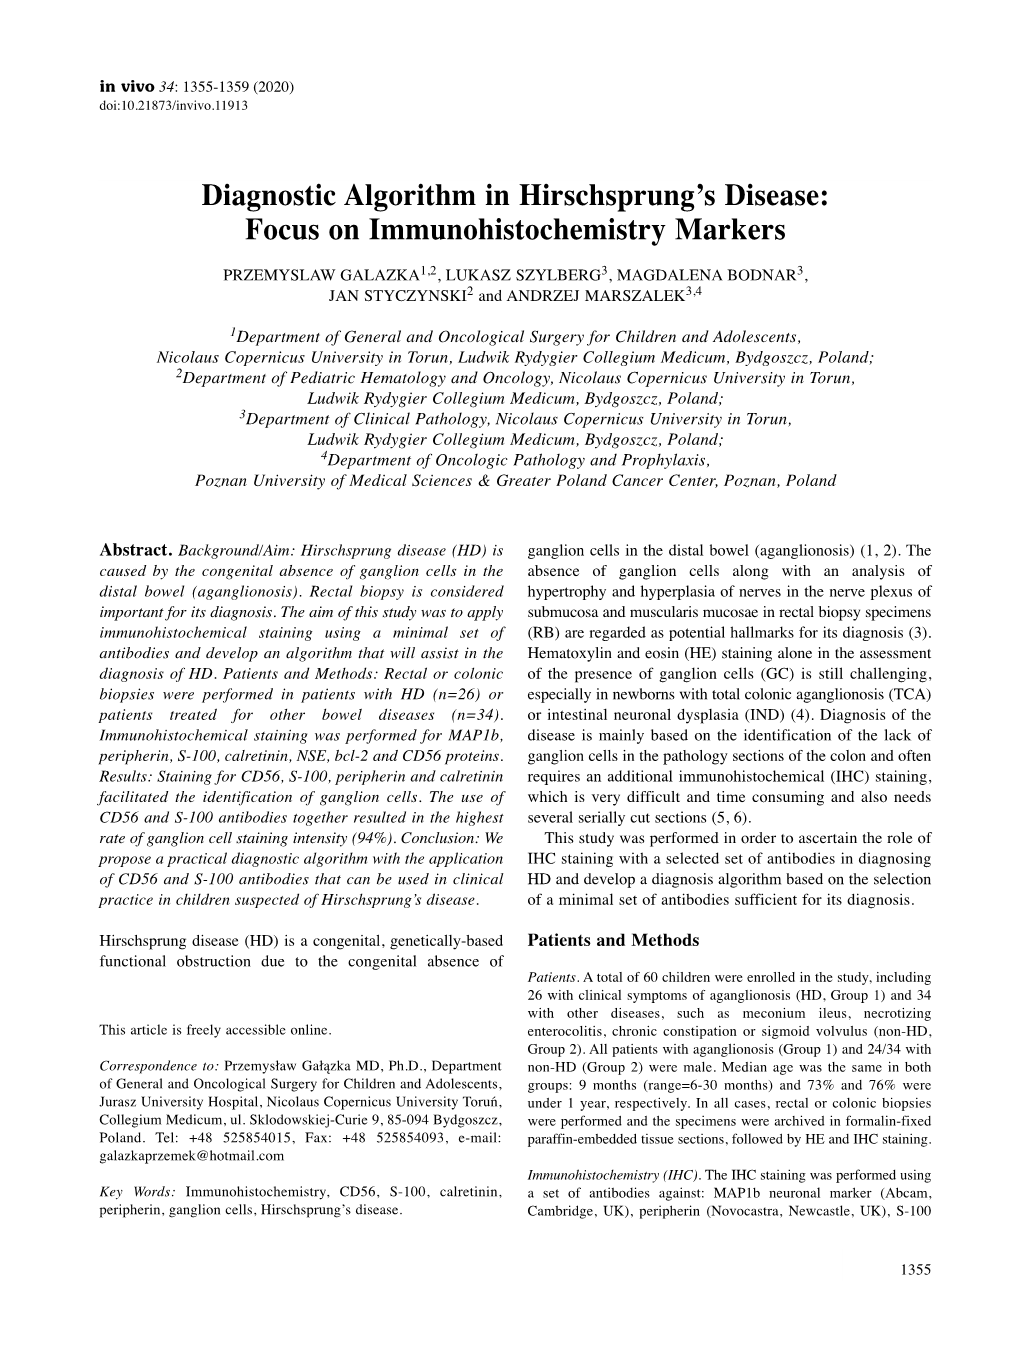 Diagnostic Algorithm in Hirschsprung's Disease